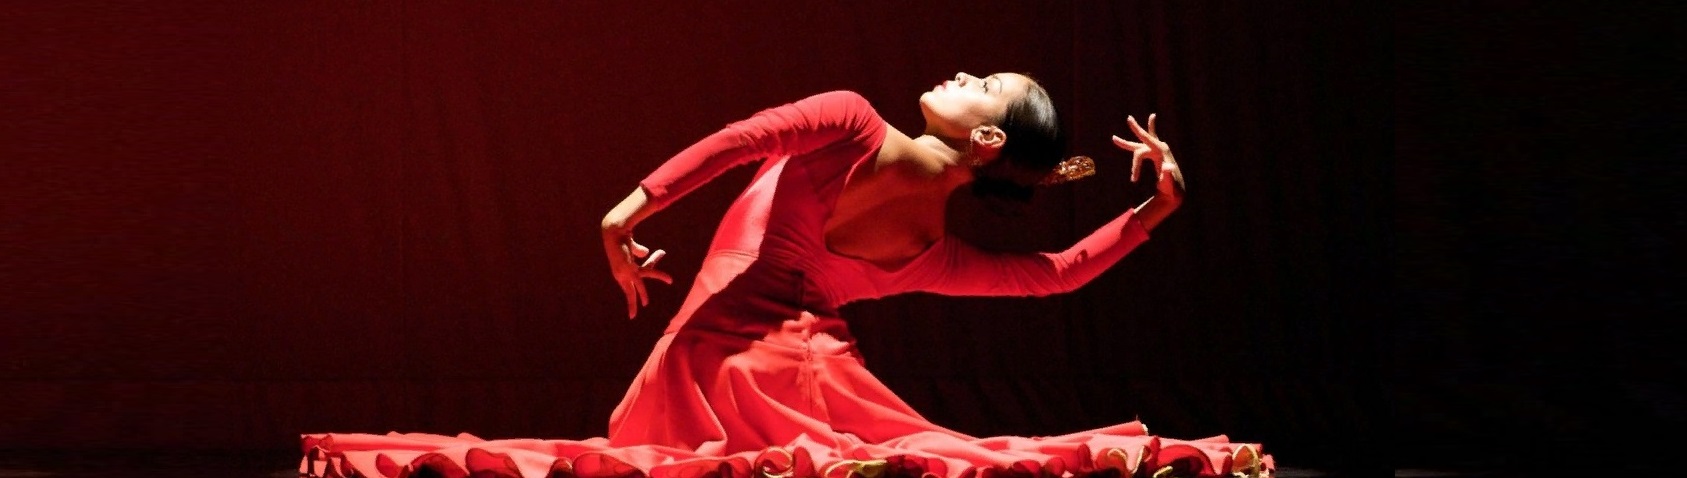 flamenko 4